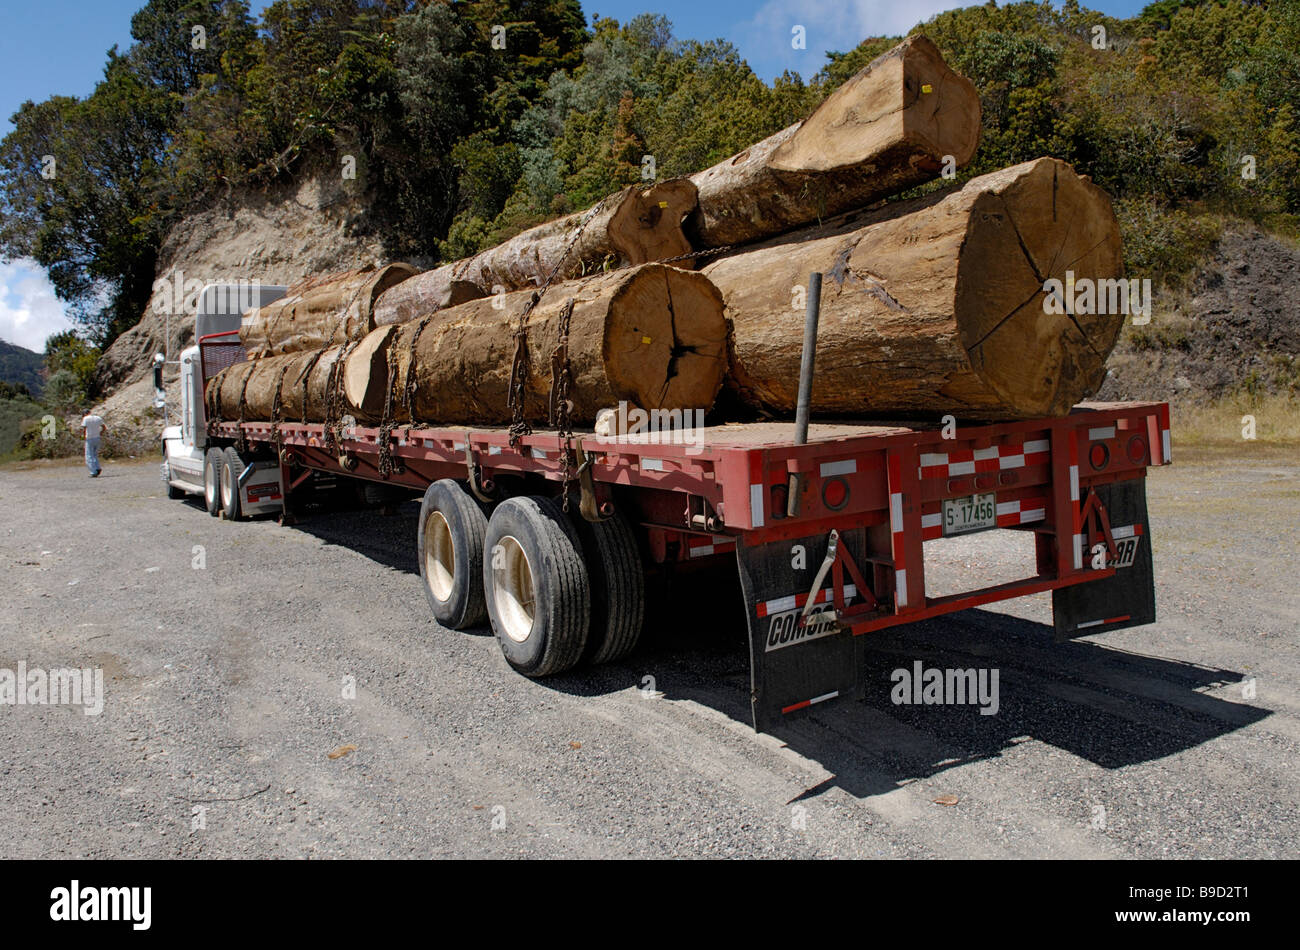 Logging truck, Costa Rica Banque D'Images